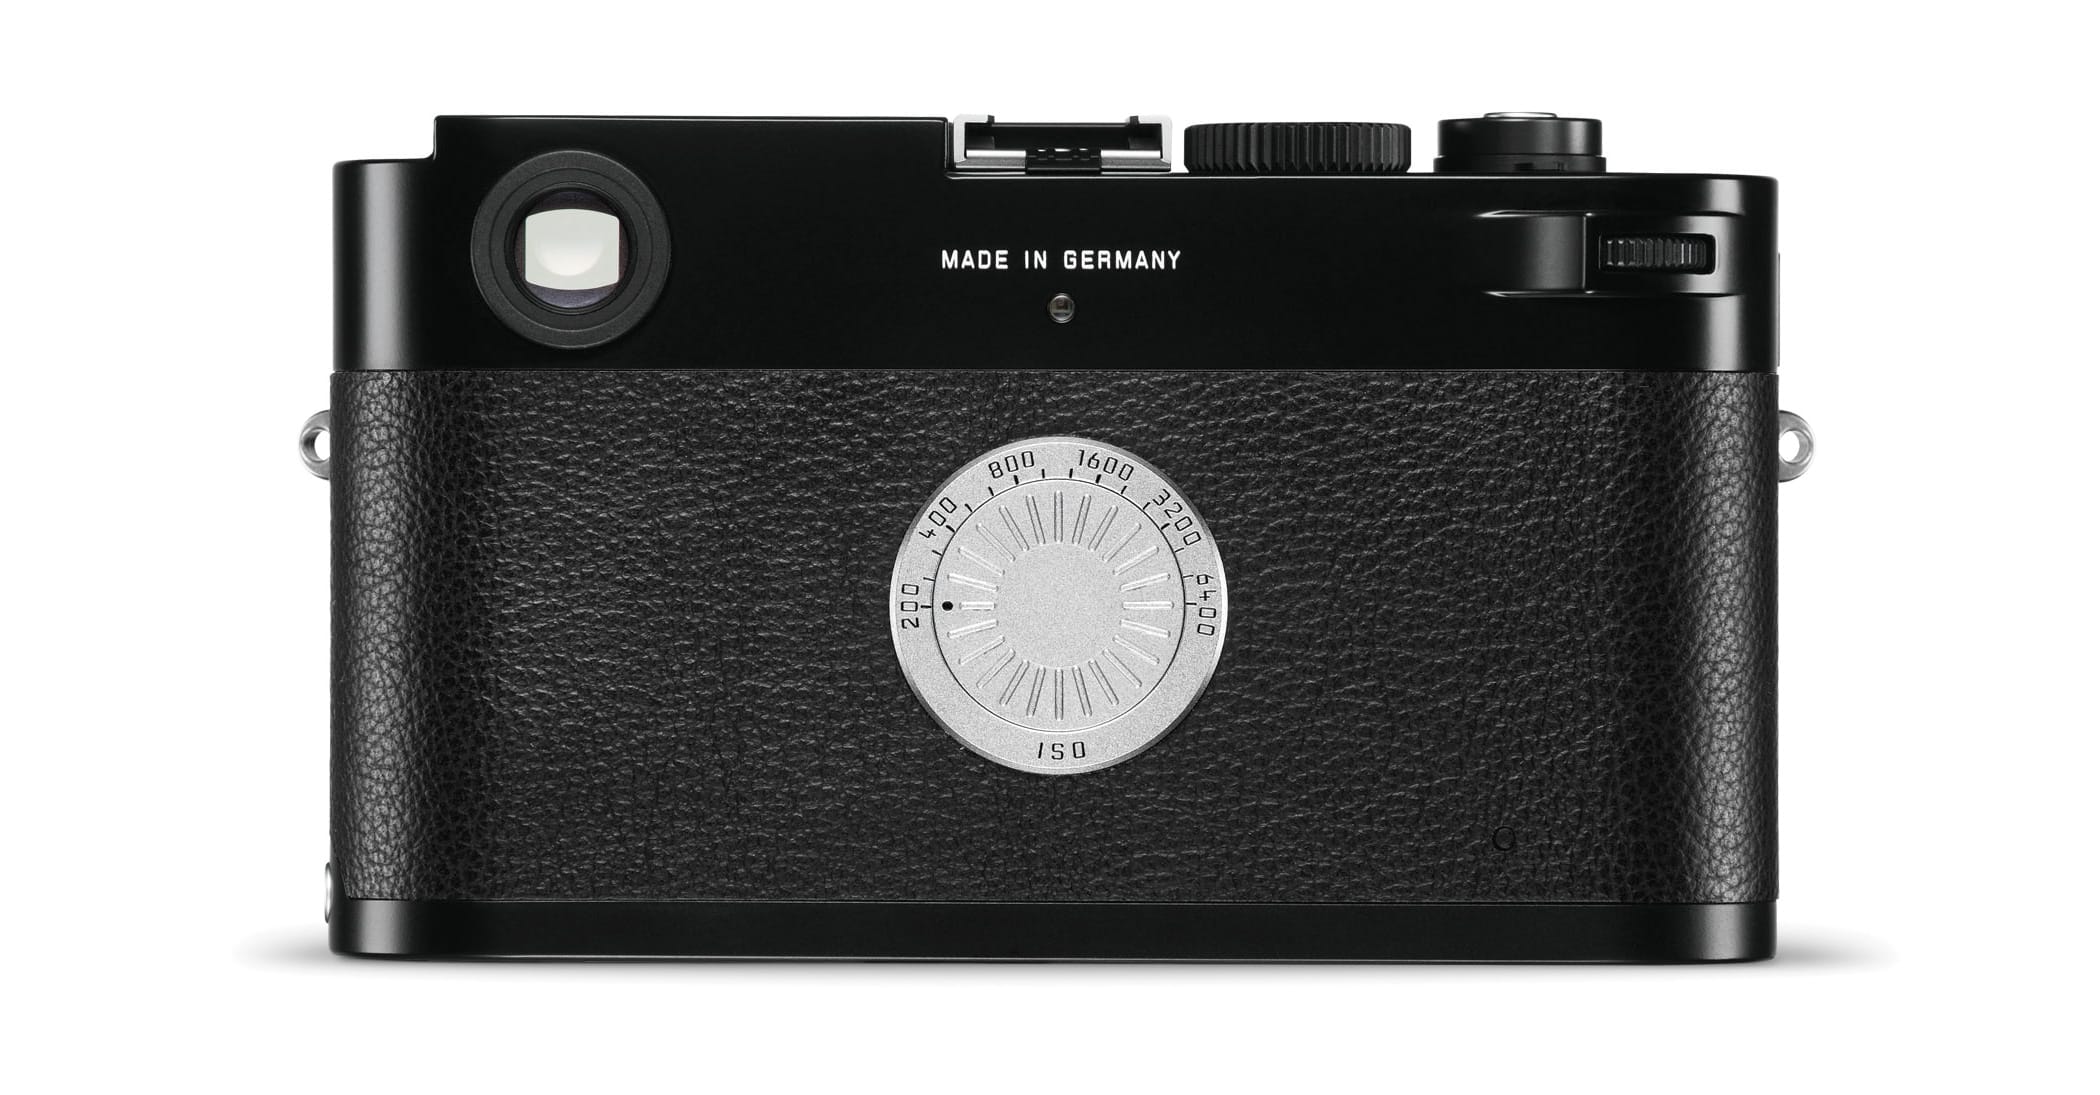 Leica-M-D-Typ-262-back-fb